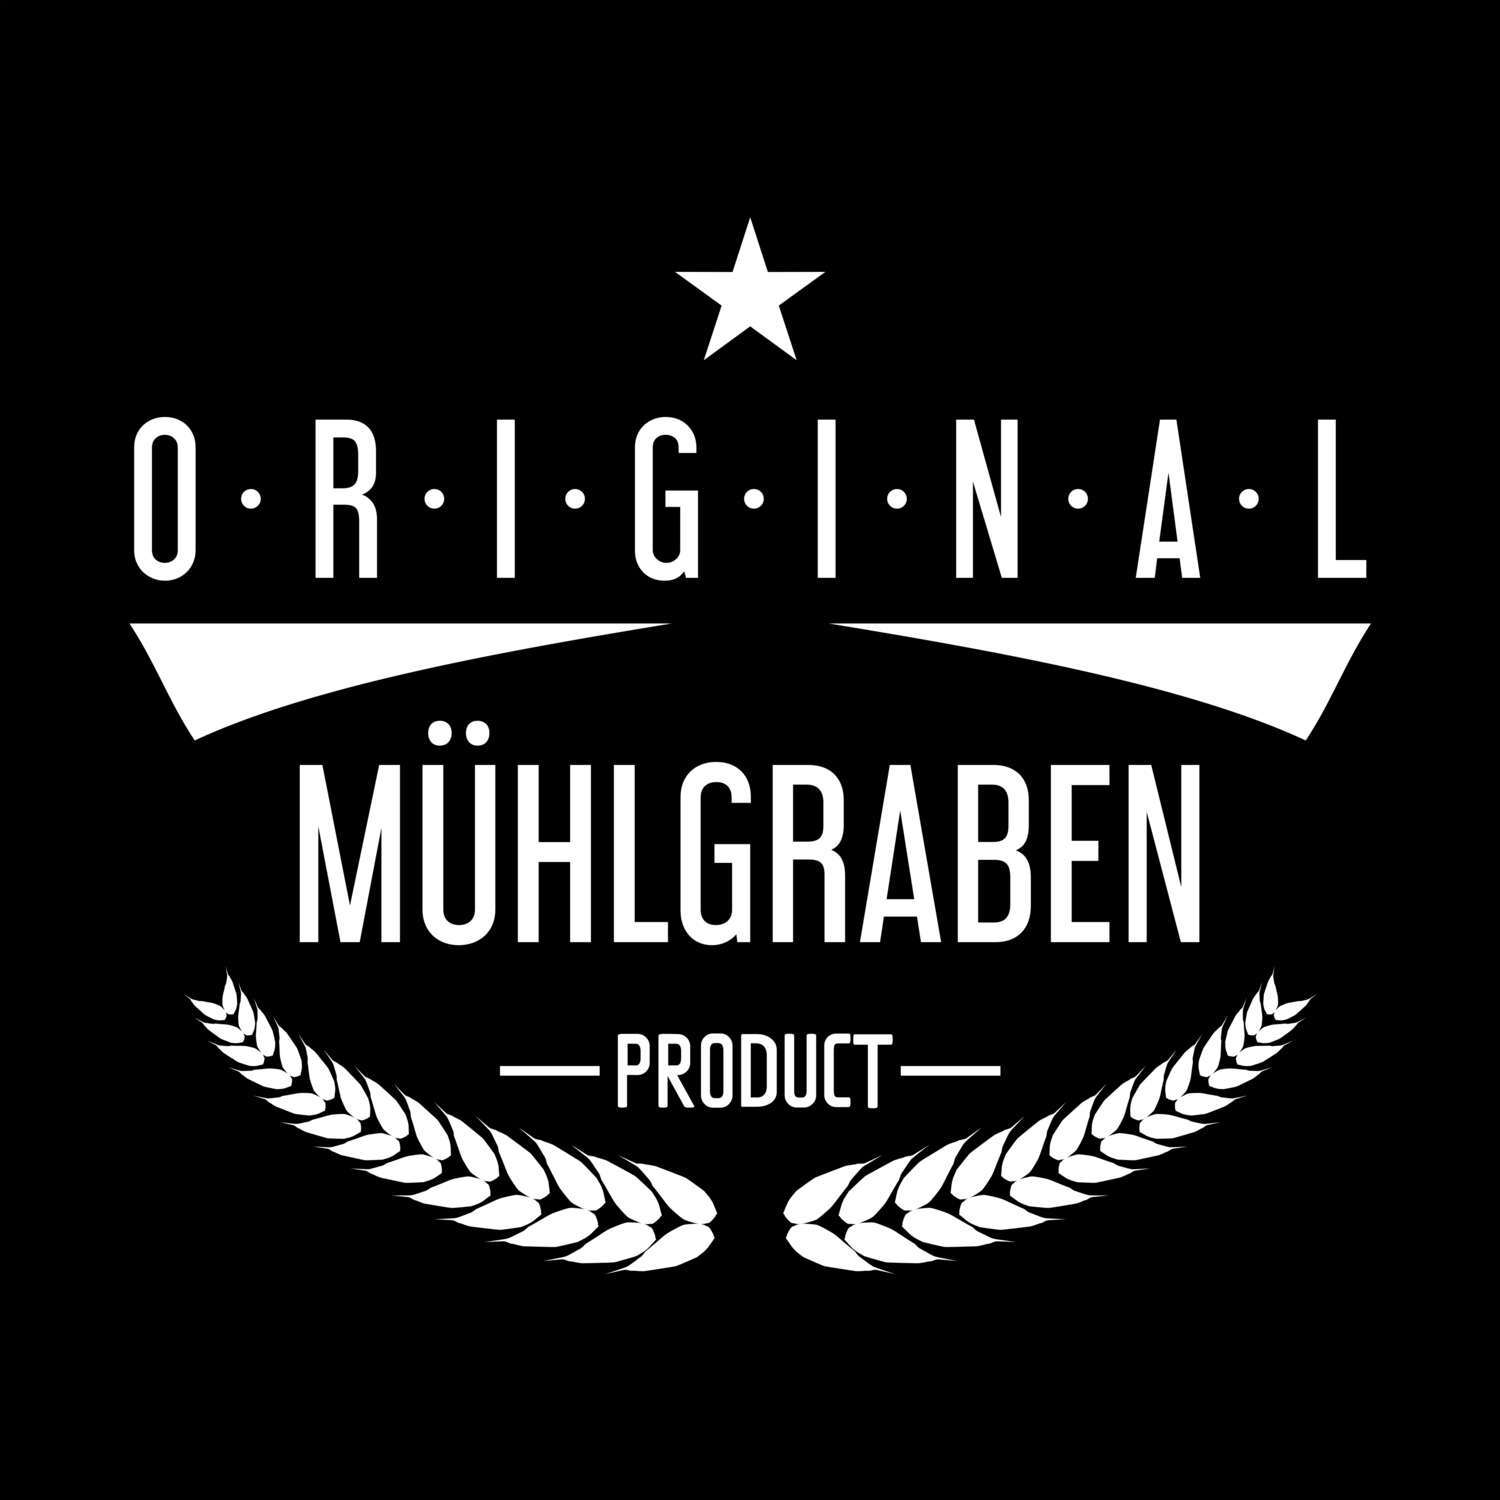 Mühlgraben T-Shirt »Original Product«